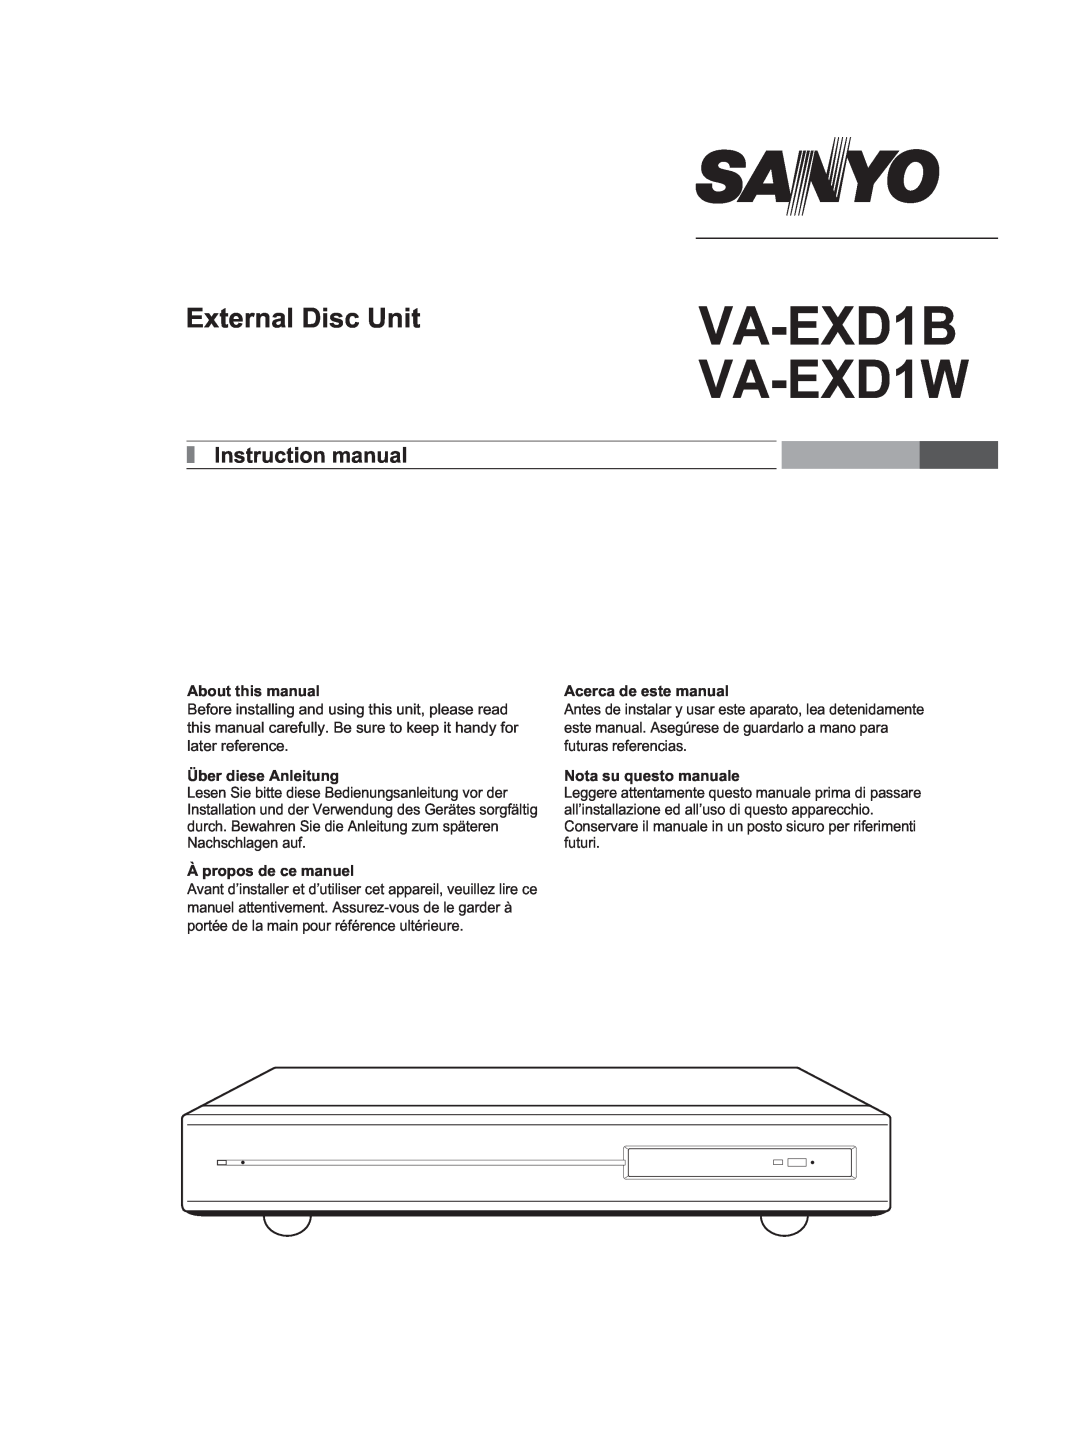 Sanyo instruction manual VA-EXD1B VA-EXD1W, External Disc Unit, About this manual, Über diese Anleitung 